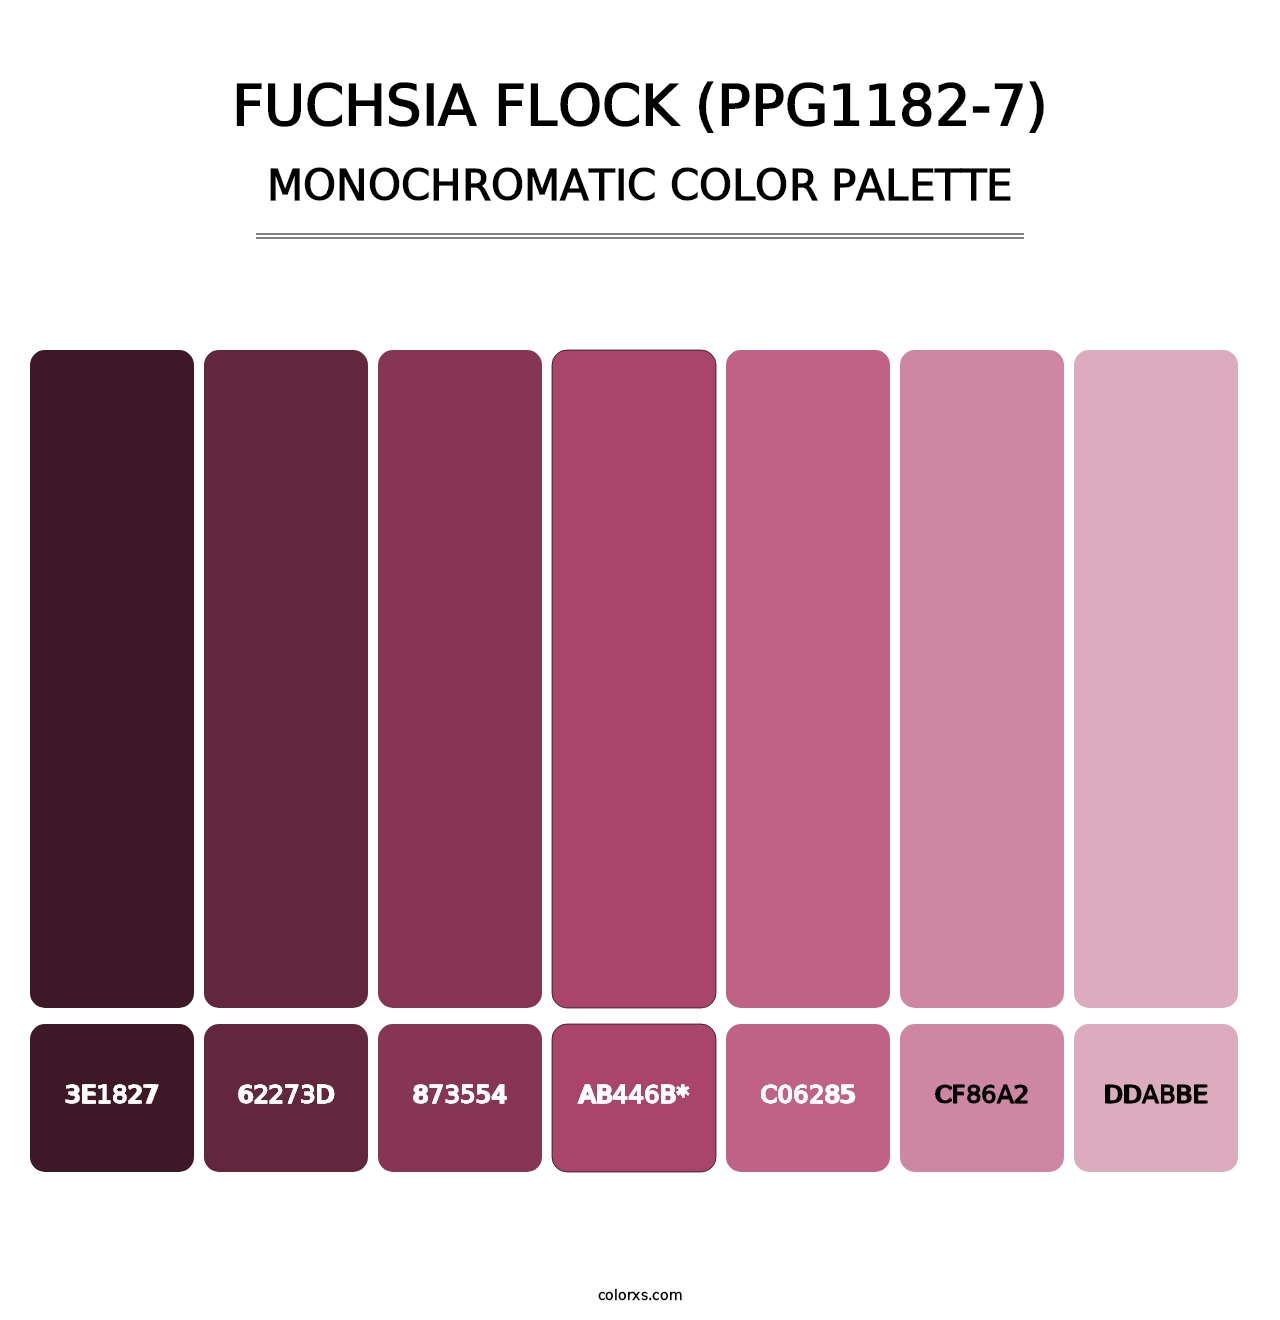 Fuchsia Flock (PPG1182-7) - Monochromatic Color Palette